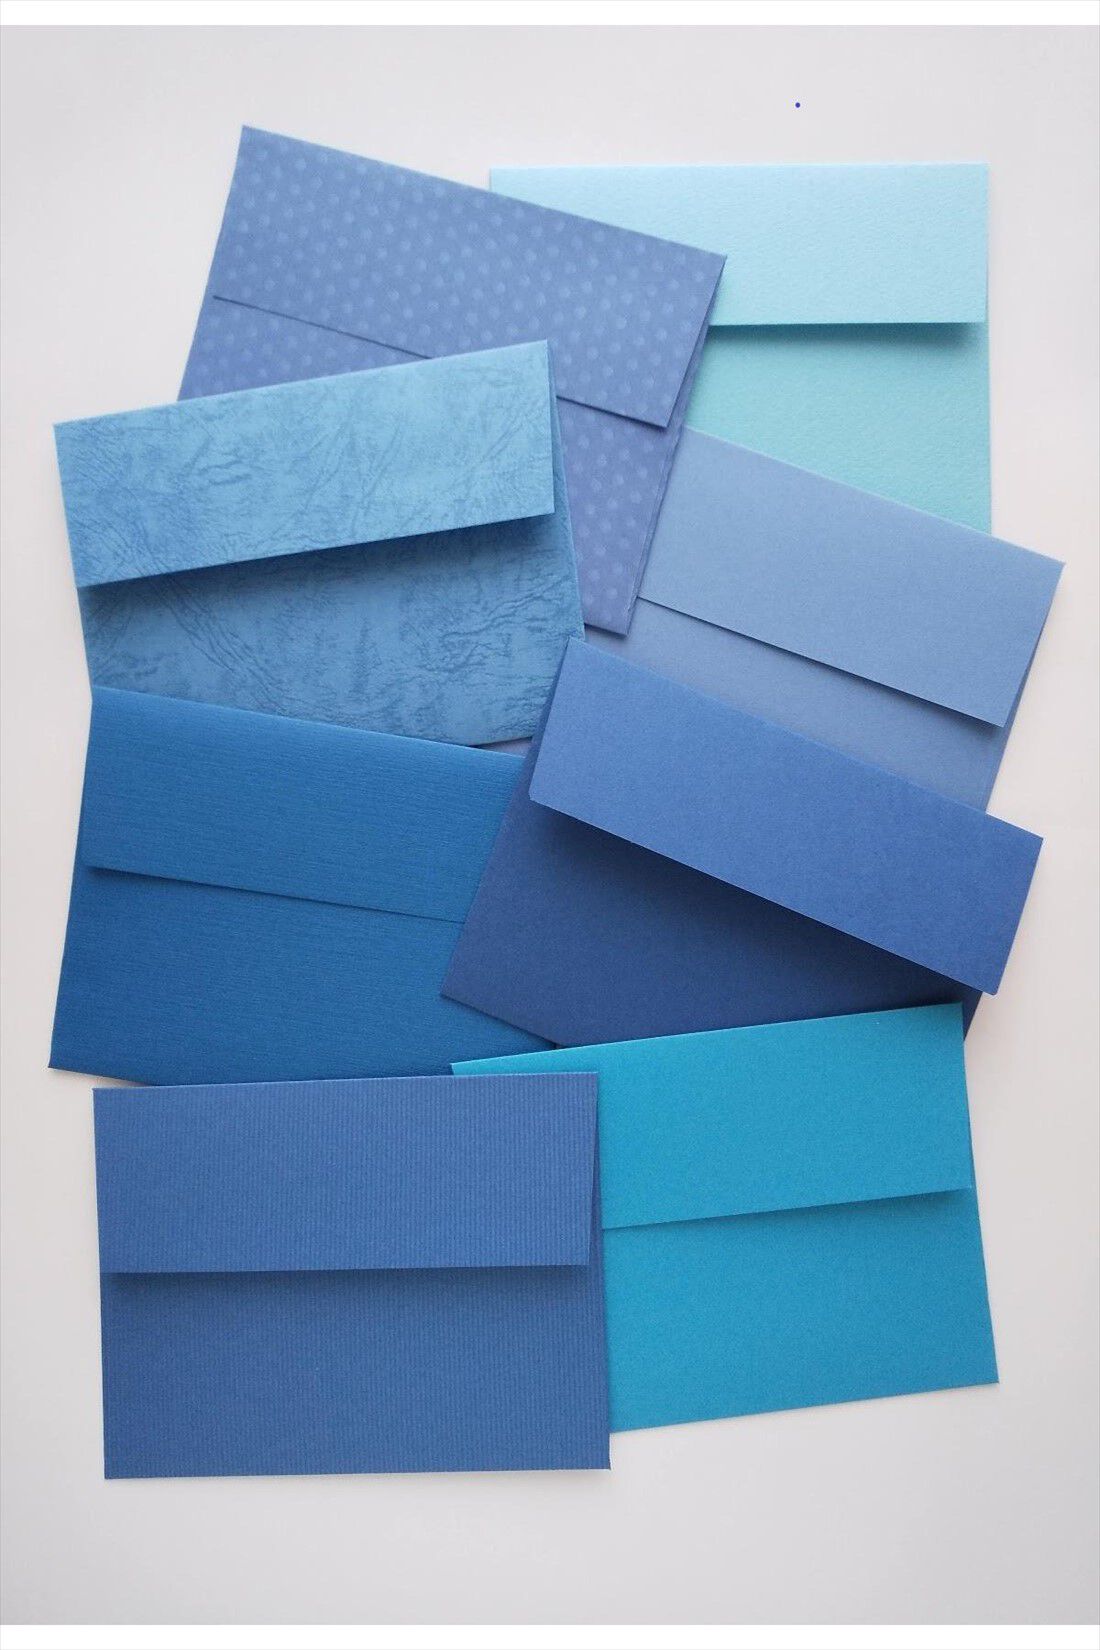 OSYAIRO|OSYAIRO 紙の専門商社竹尾が選ぶ　色を楽しむ紙セットの会〈青〉|A4の紙で作った封筒たち。手づくりの楽しさも。